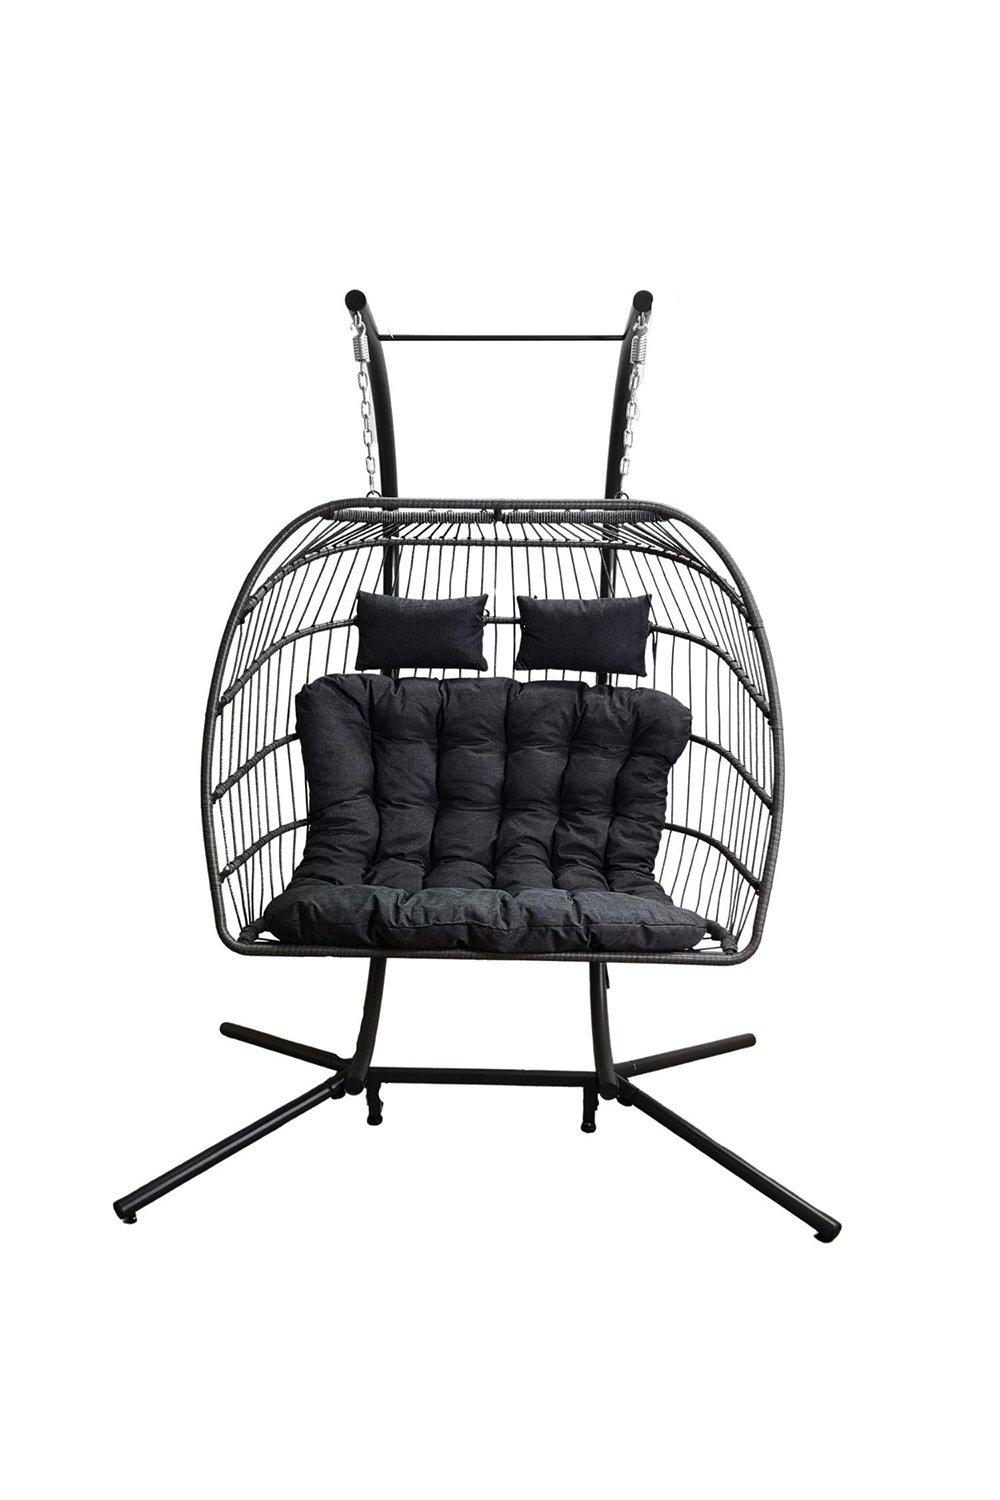 Samuel Alexander Grey Luxury 2 Seater Double Hanging Egg Chair Garden Outdoor Swing Folding With Cus